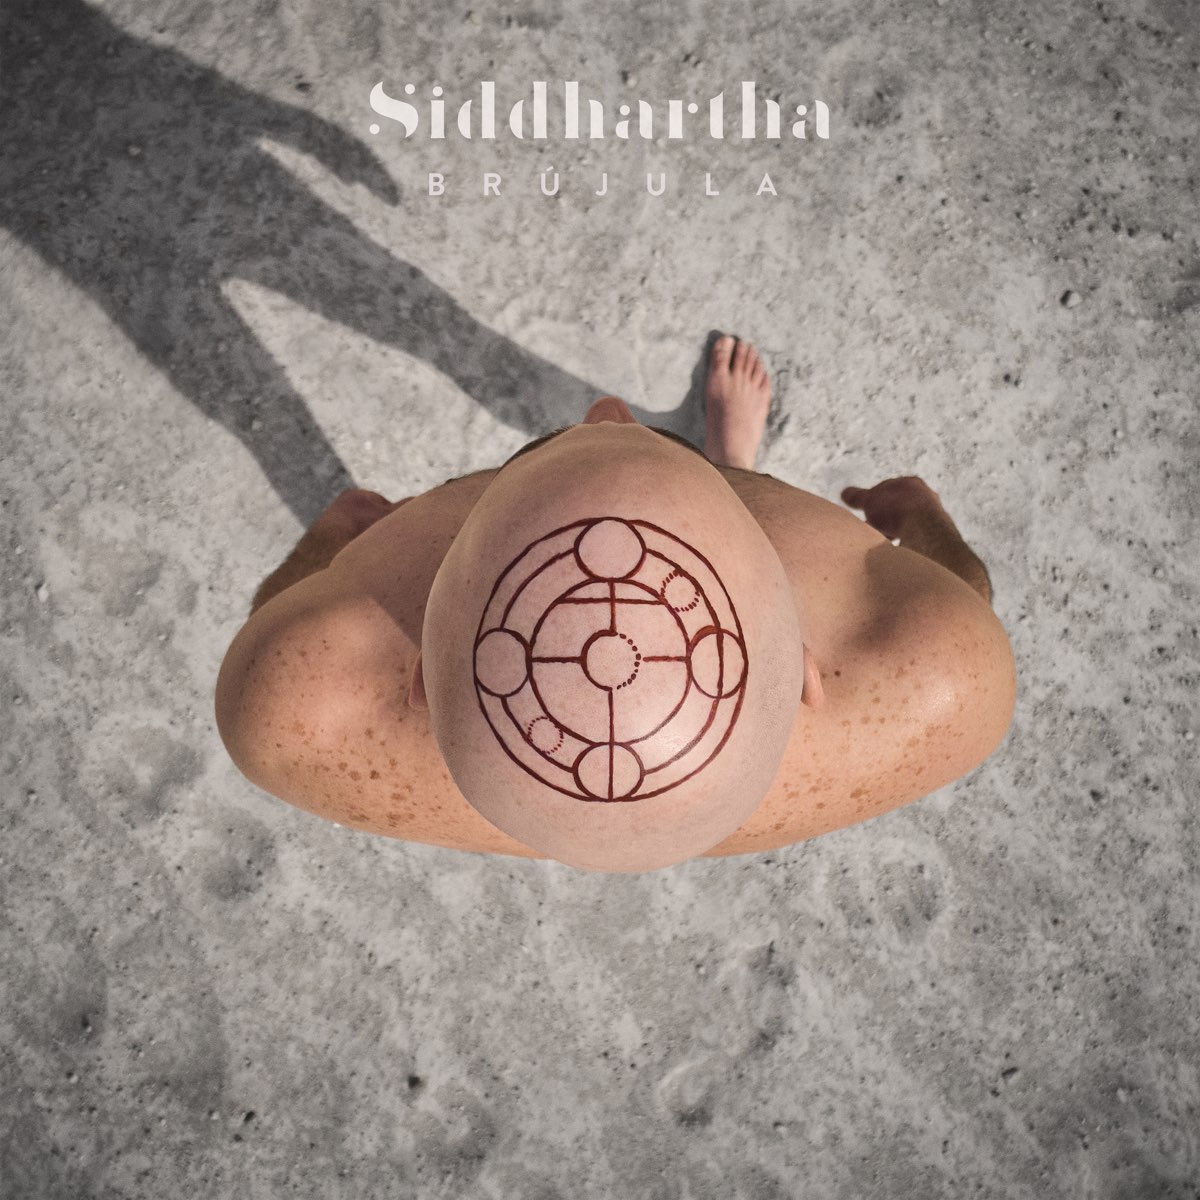 Siddhartha Brújula cover artwork